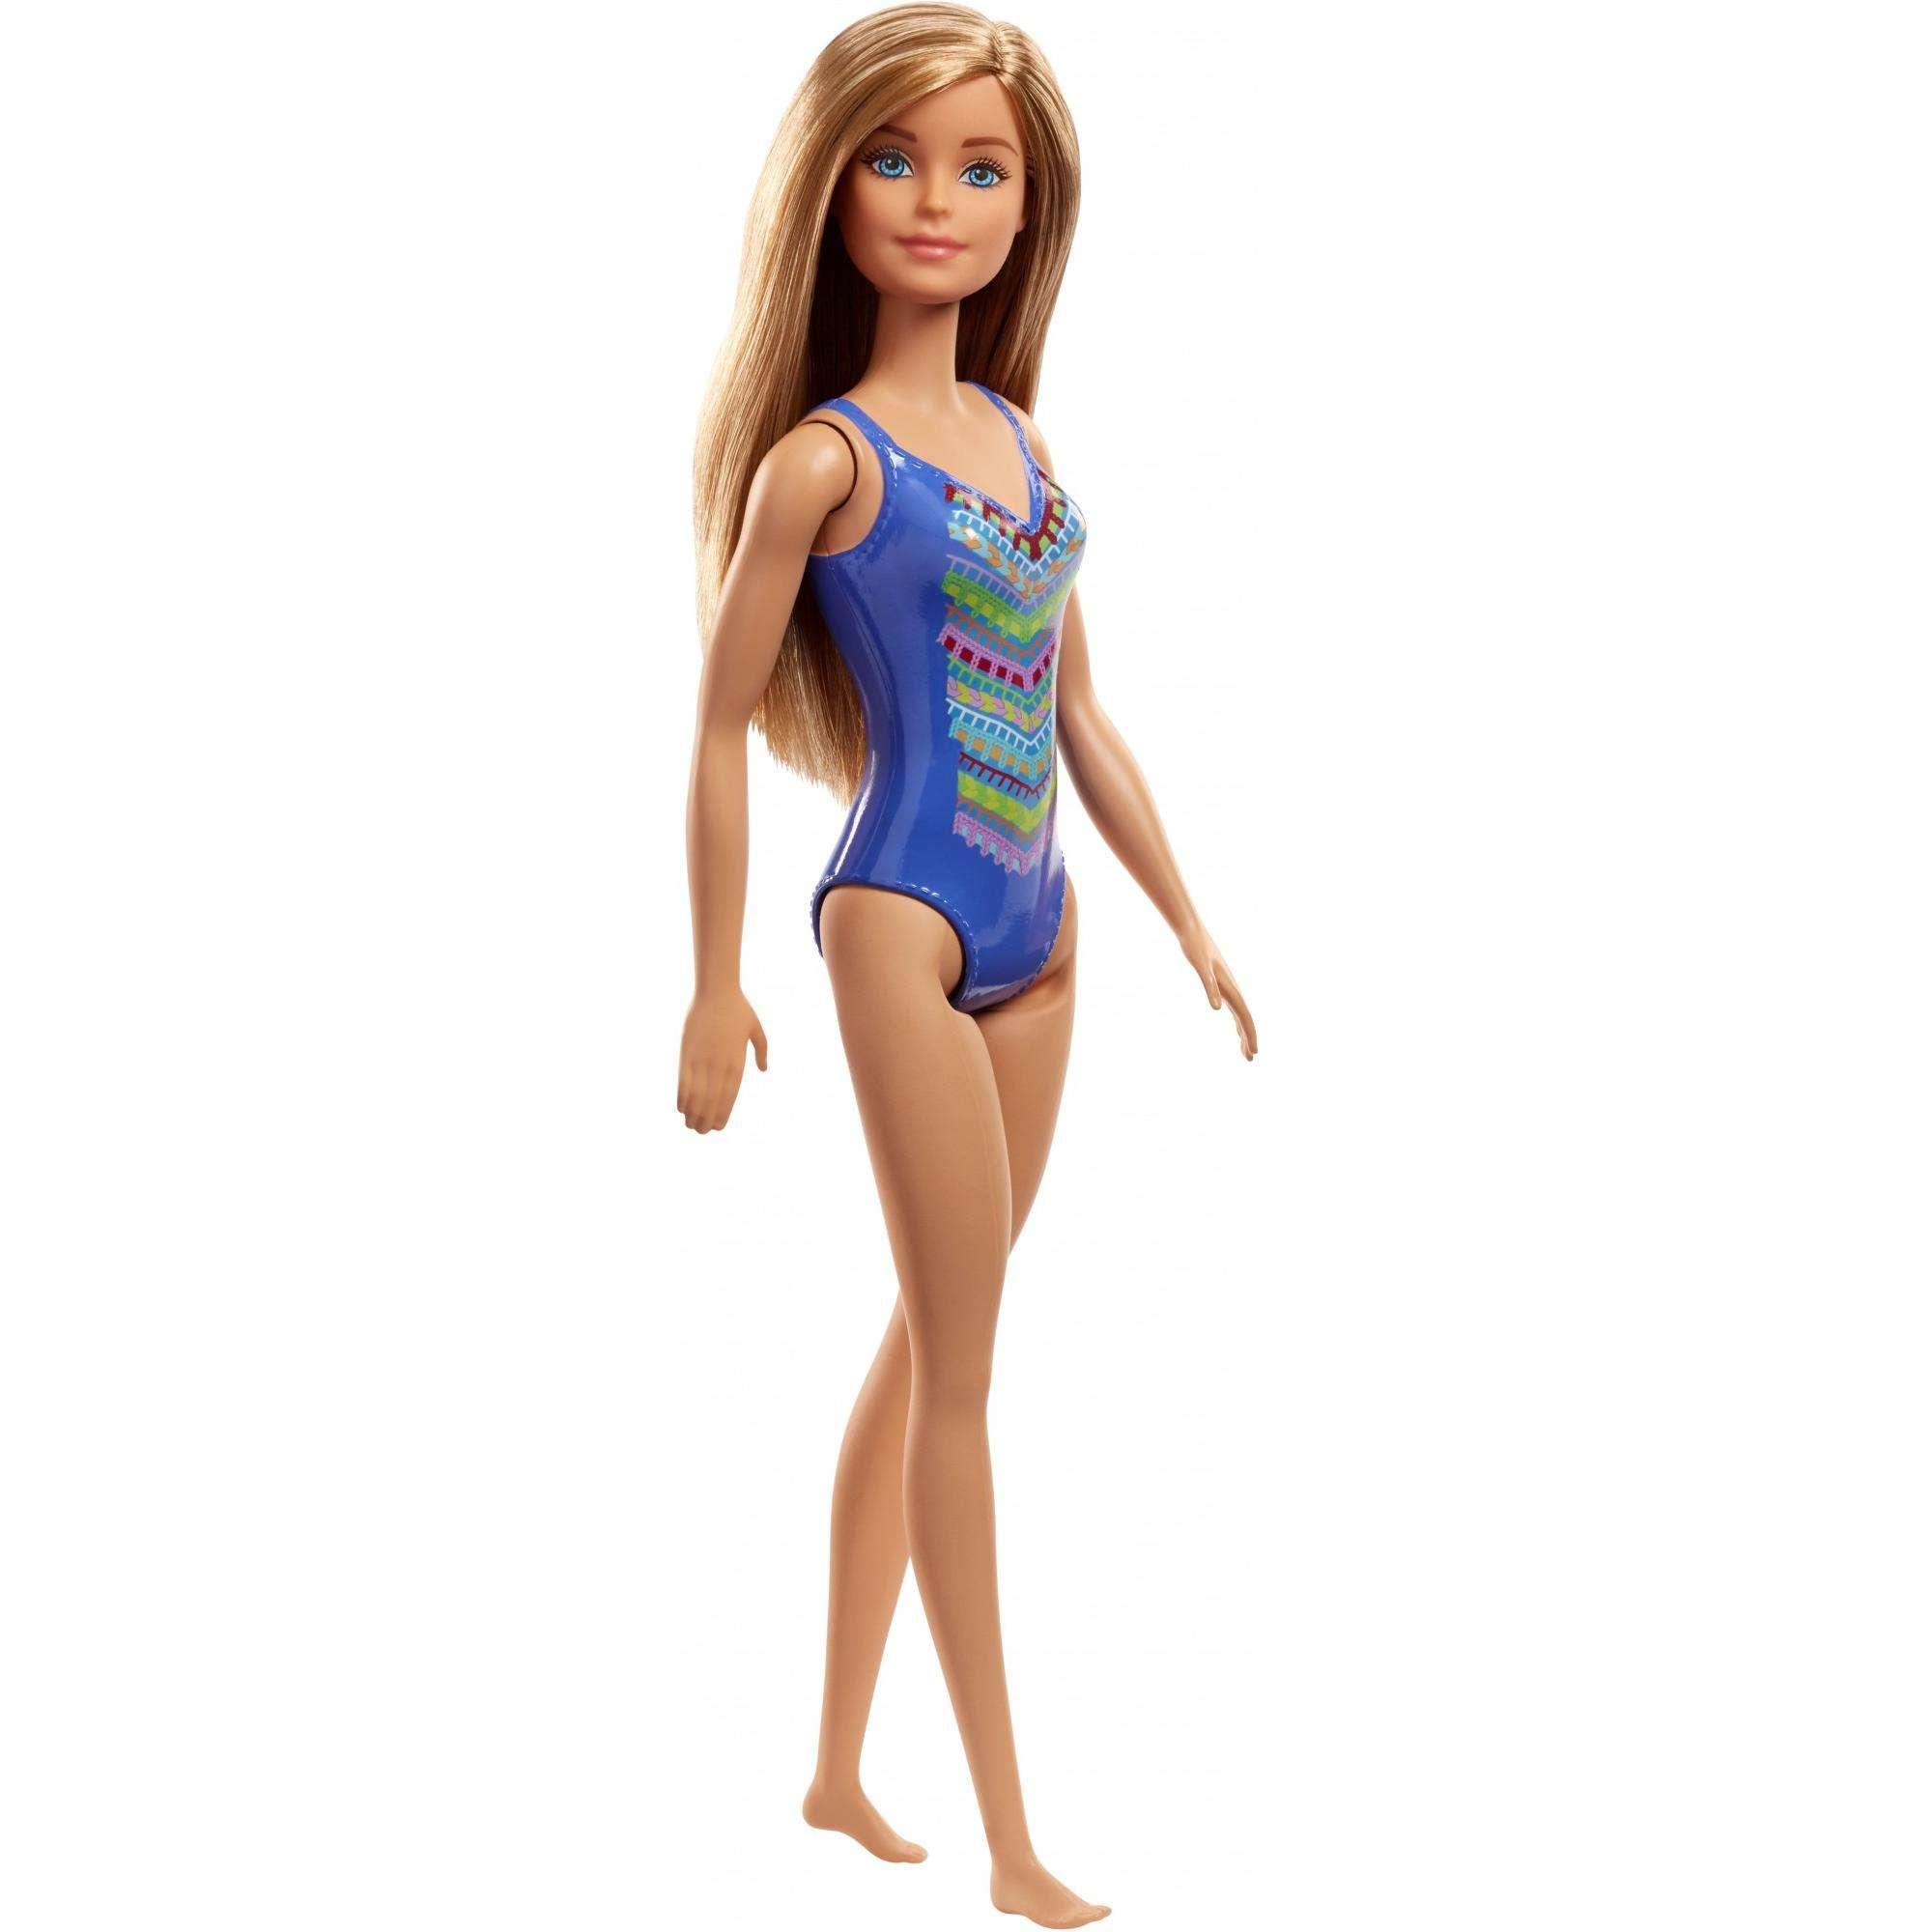 Barbie Beach Barbie Doll Assortment3